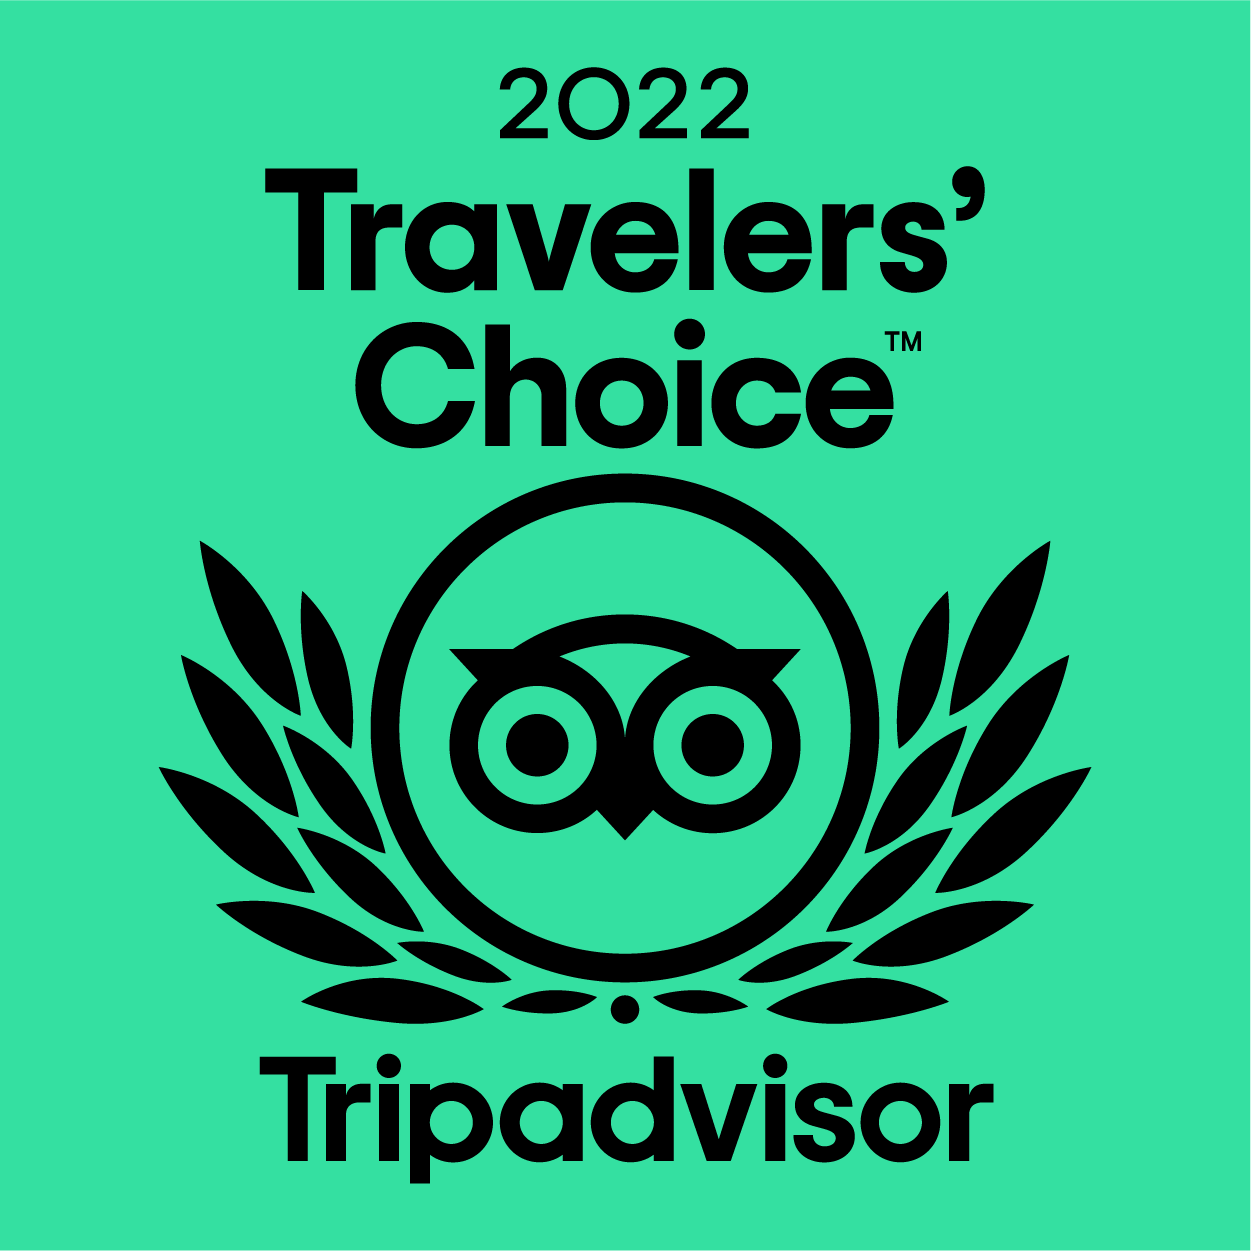 Travelers choice award 2022